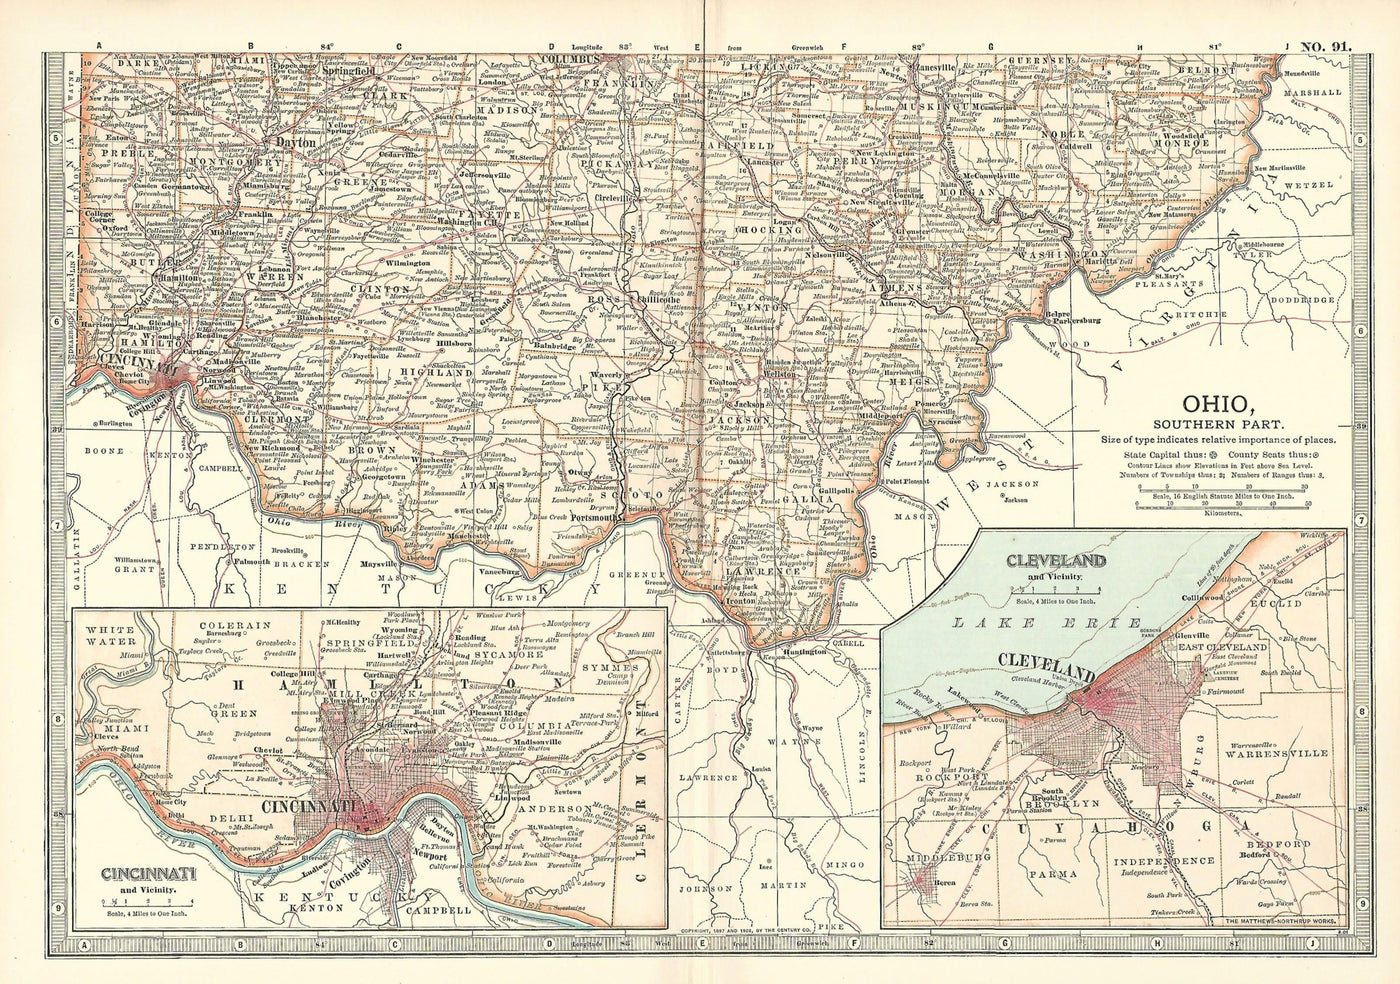 Ohio Southern Part antique map Encyclopaedia Britannica 1903